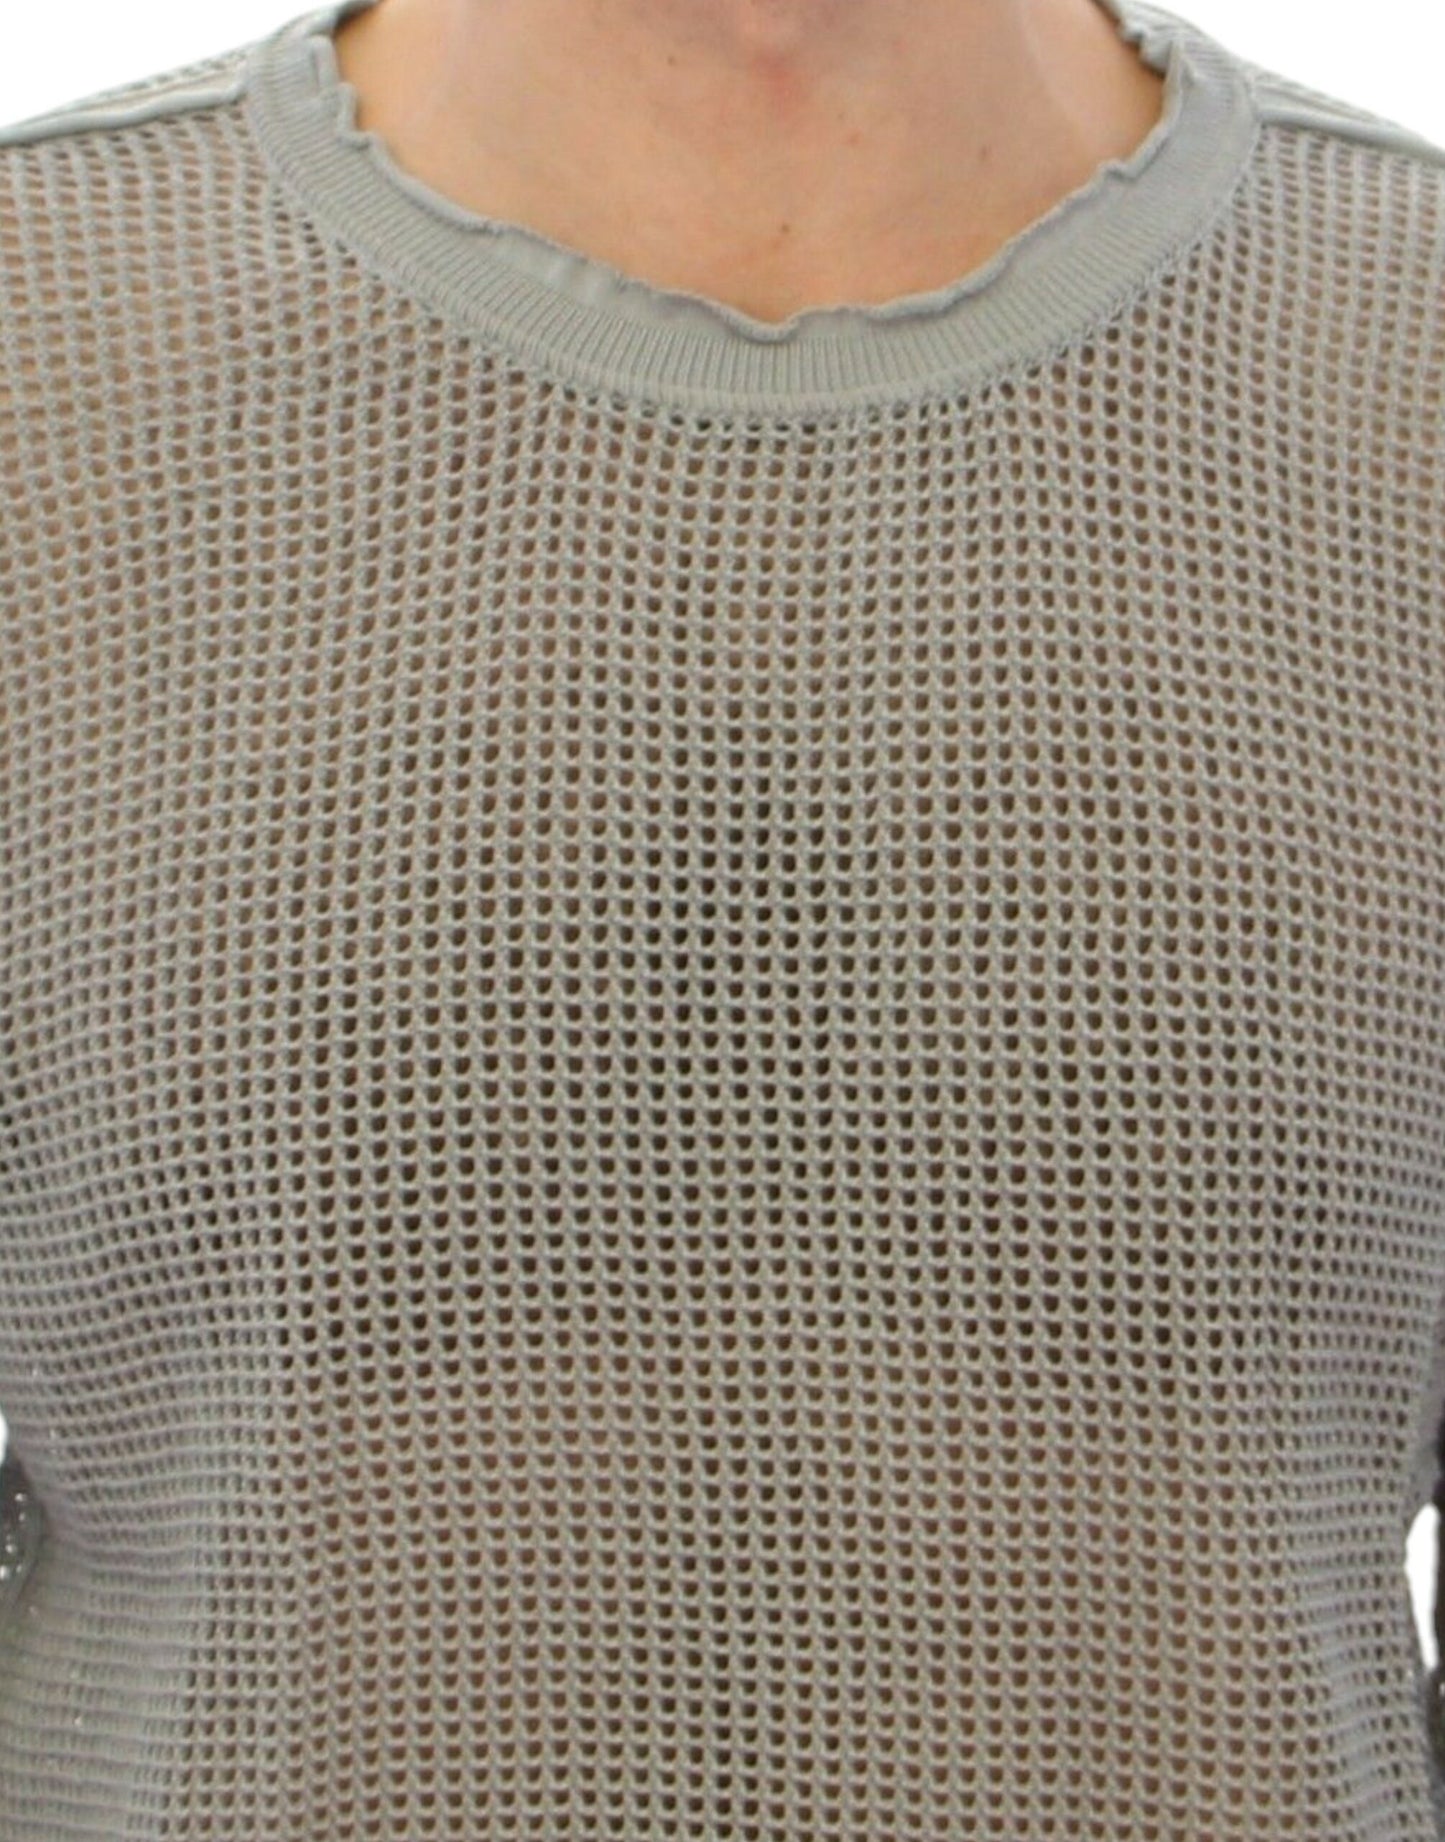 Elegant Gray Netted Crew-Neck Sweater